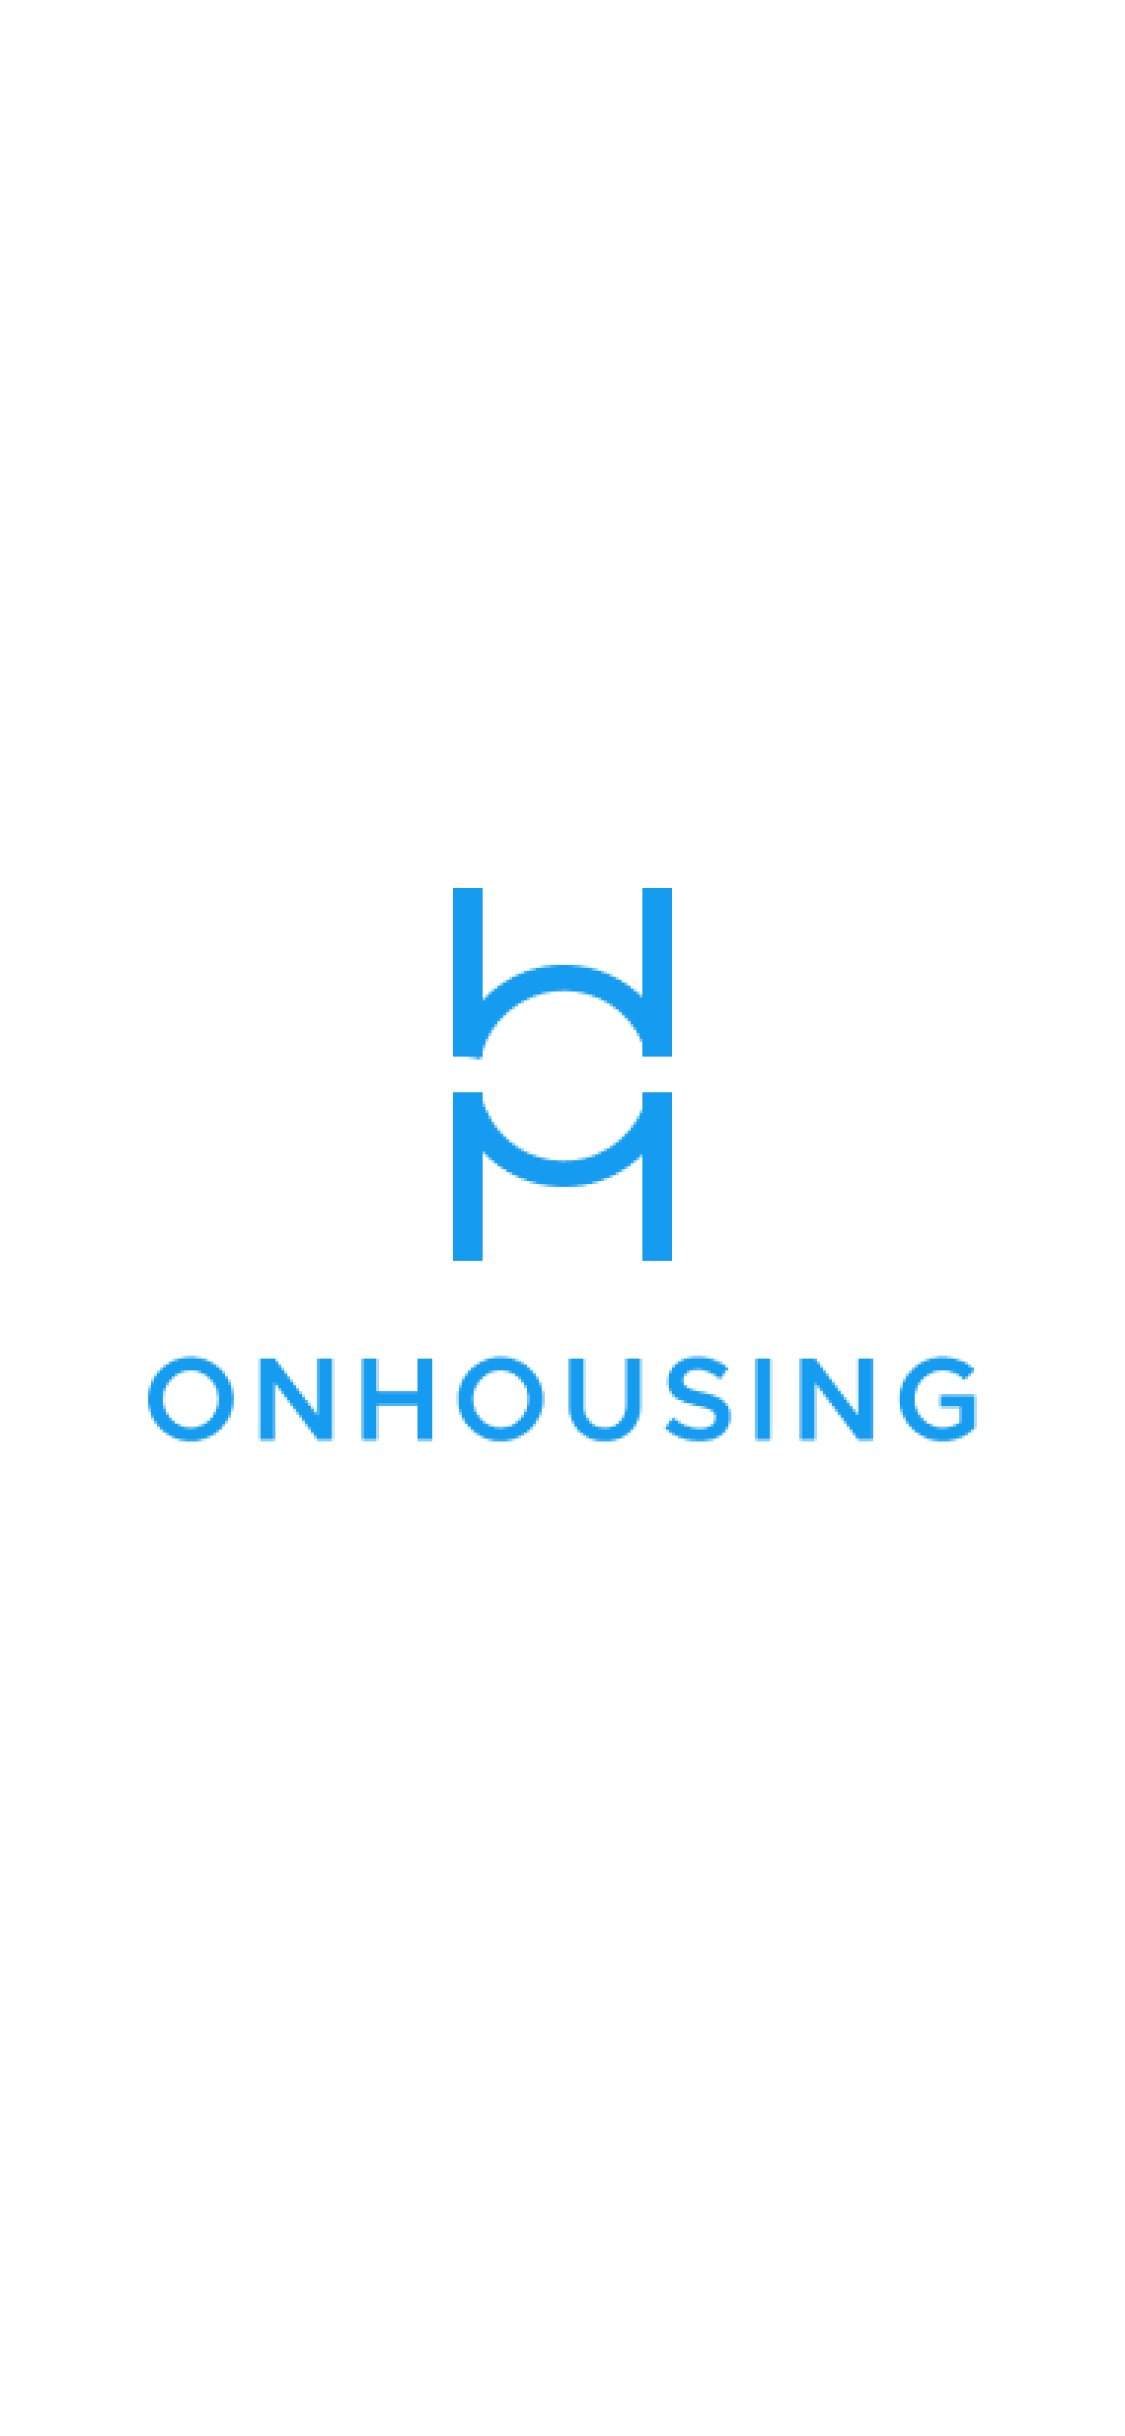 onhousing